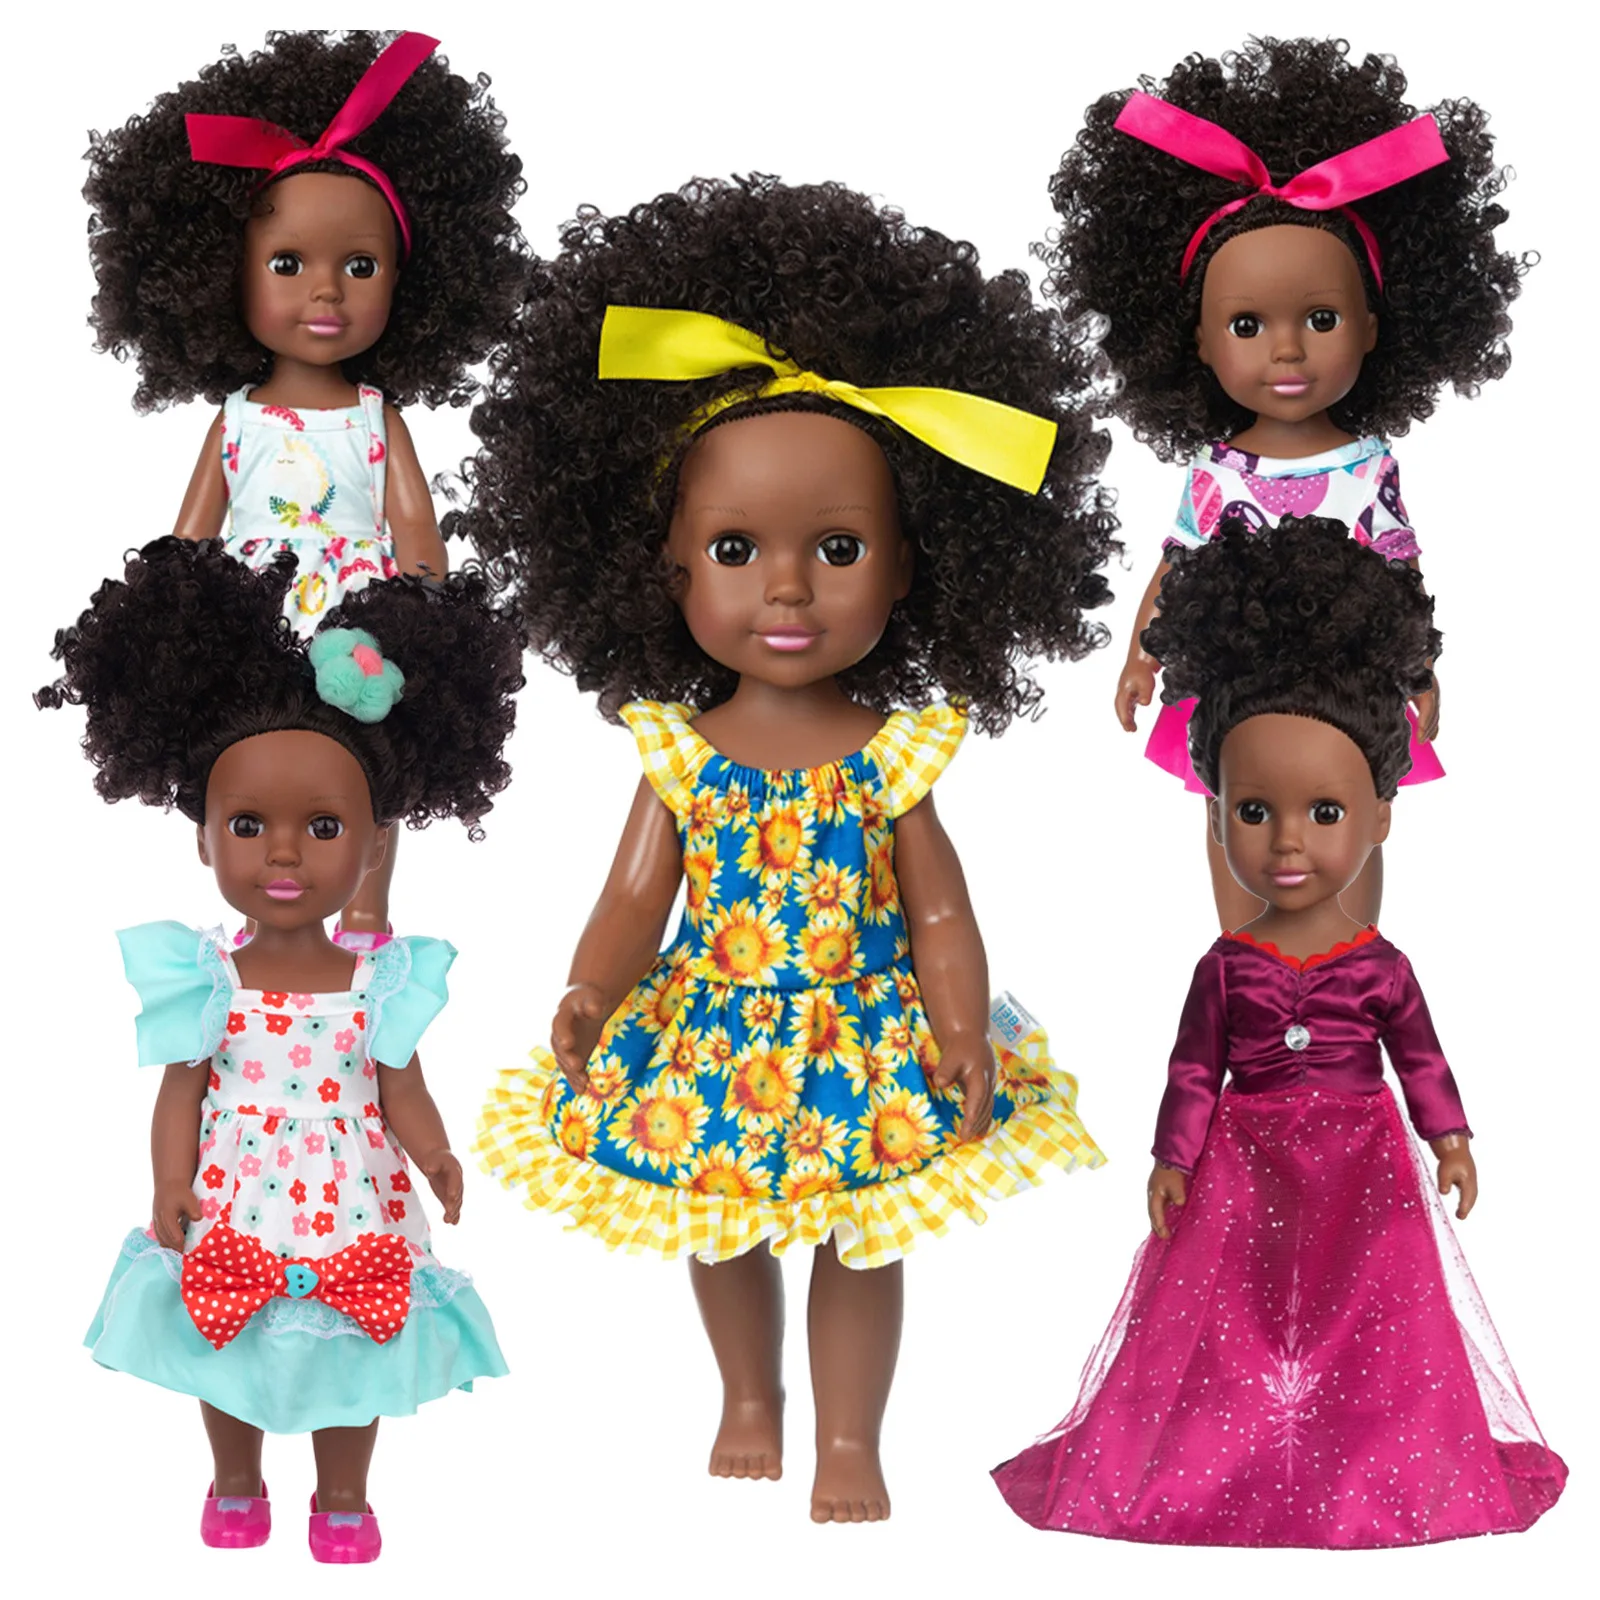 Wholesale 35cm Vinyl Dolls for Kids African Black Doll